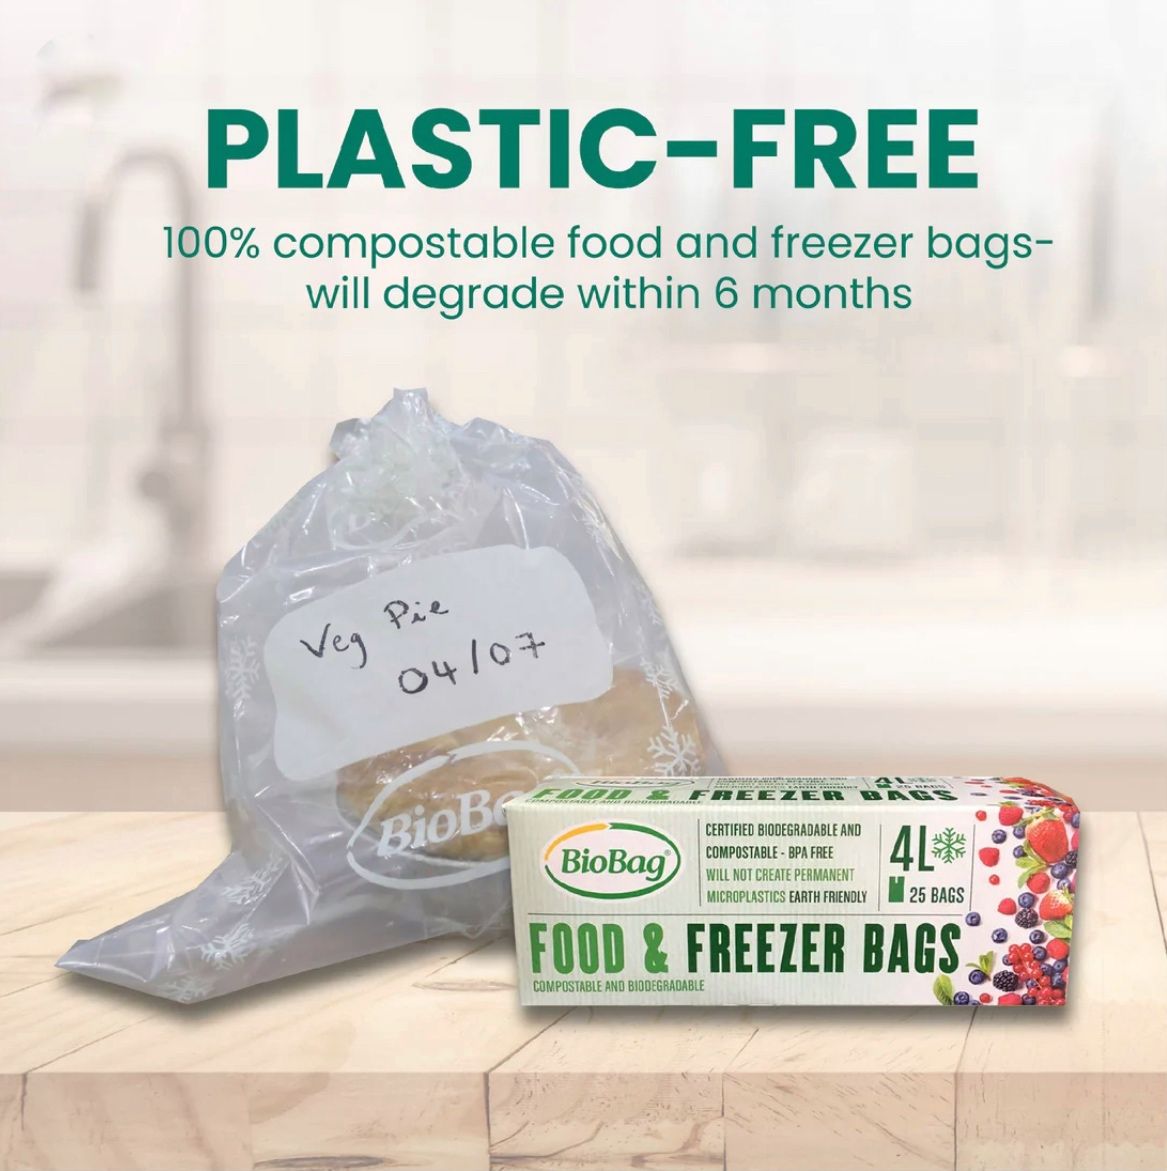 Plastic Free Freezer bags